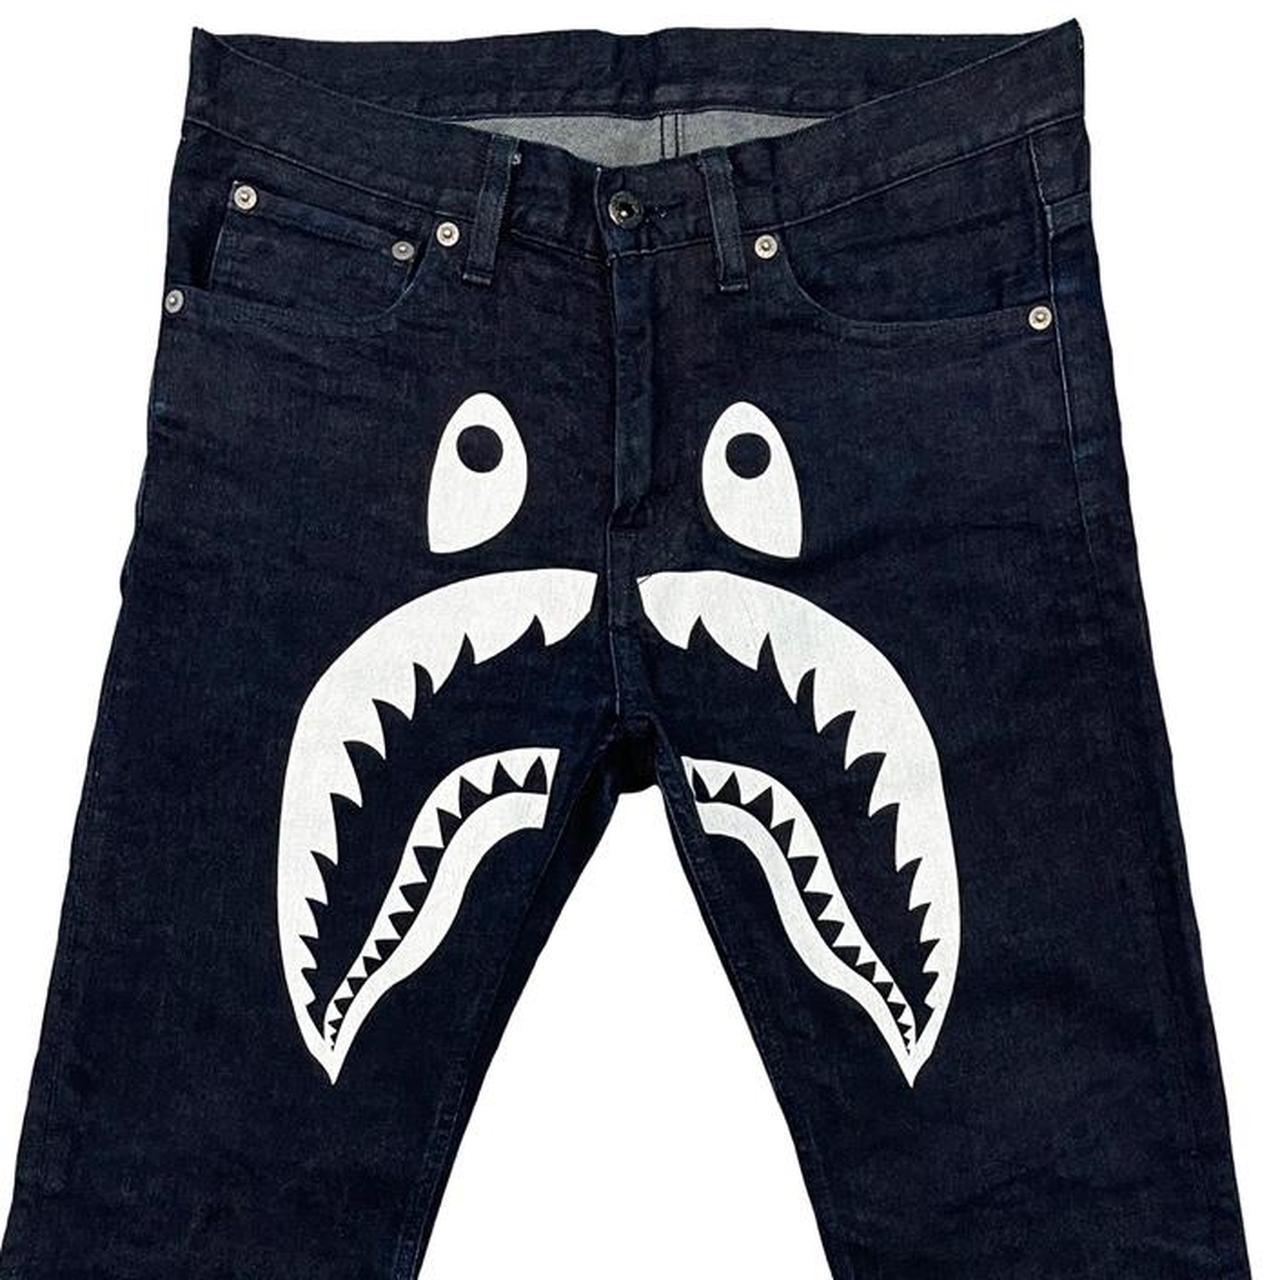 Bape Shark Jeans - Known Source